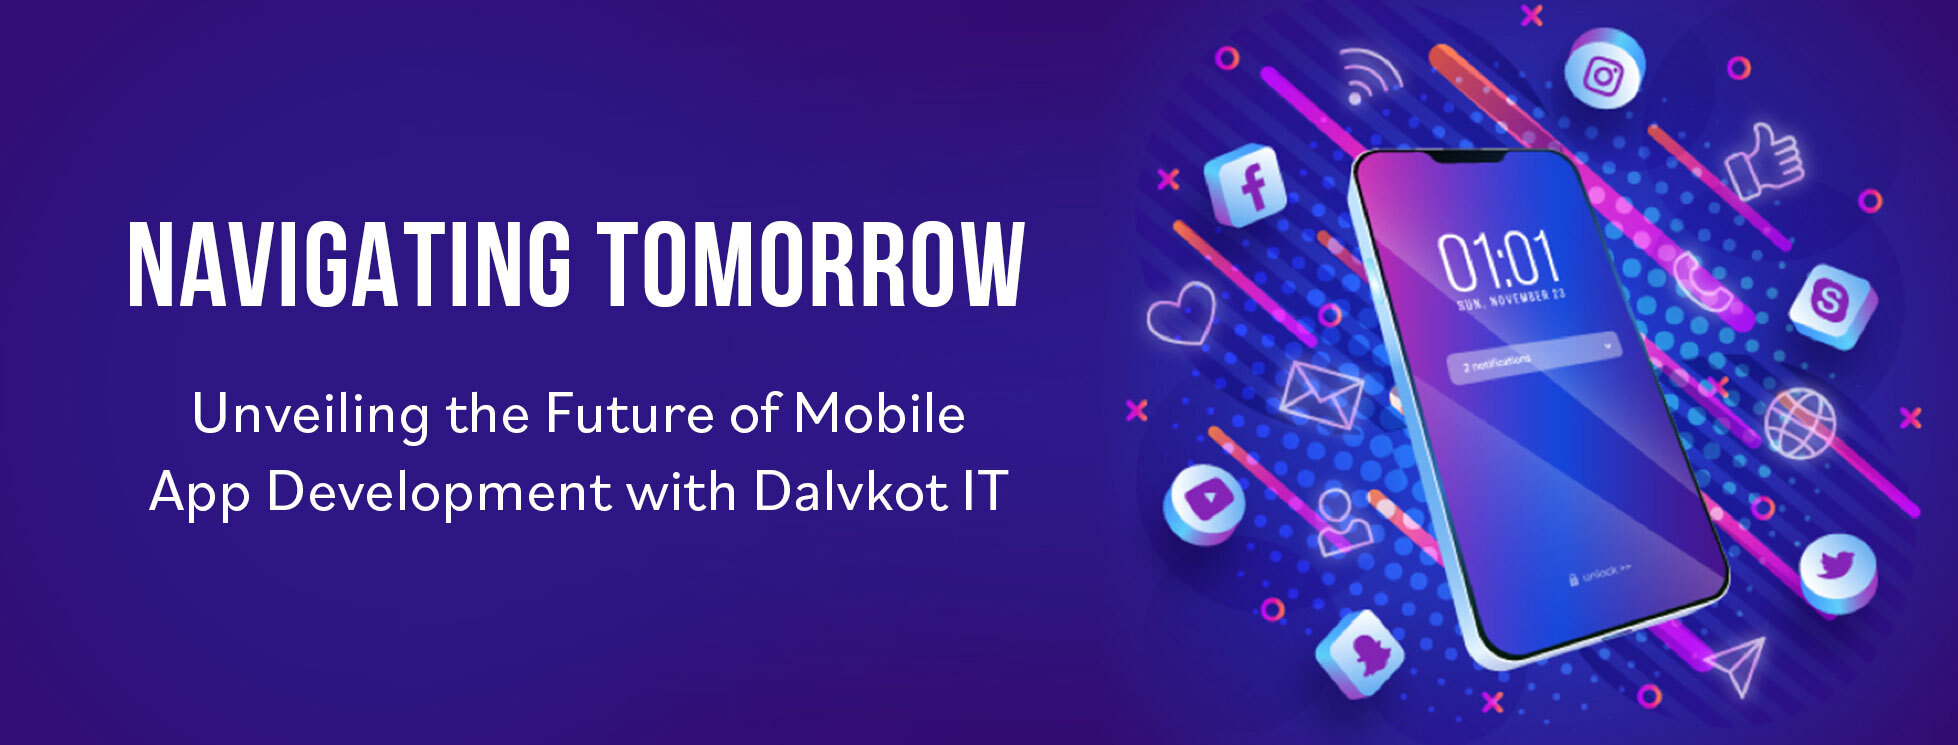 Mobile App Development with Dalvkot IT